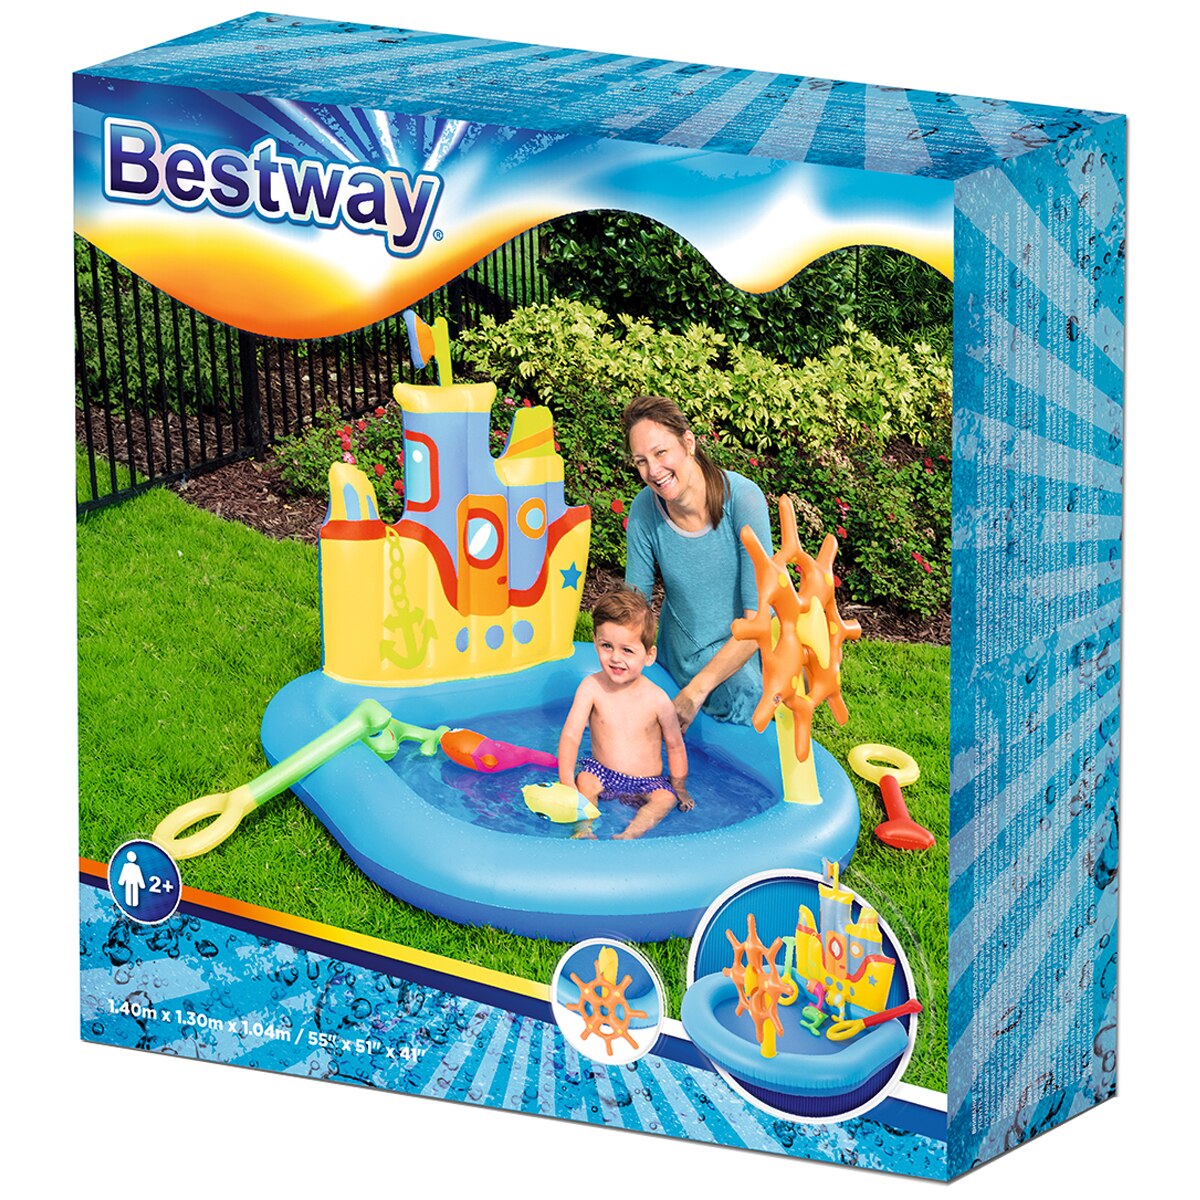 Bestway 55" x 51" x 41"/1.40m x 1.30m x 1.04m Tug Boat Play Pool